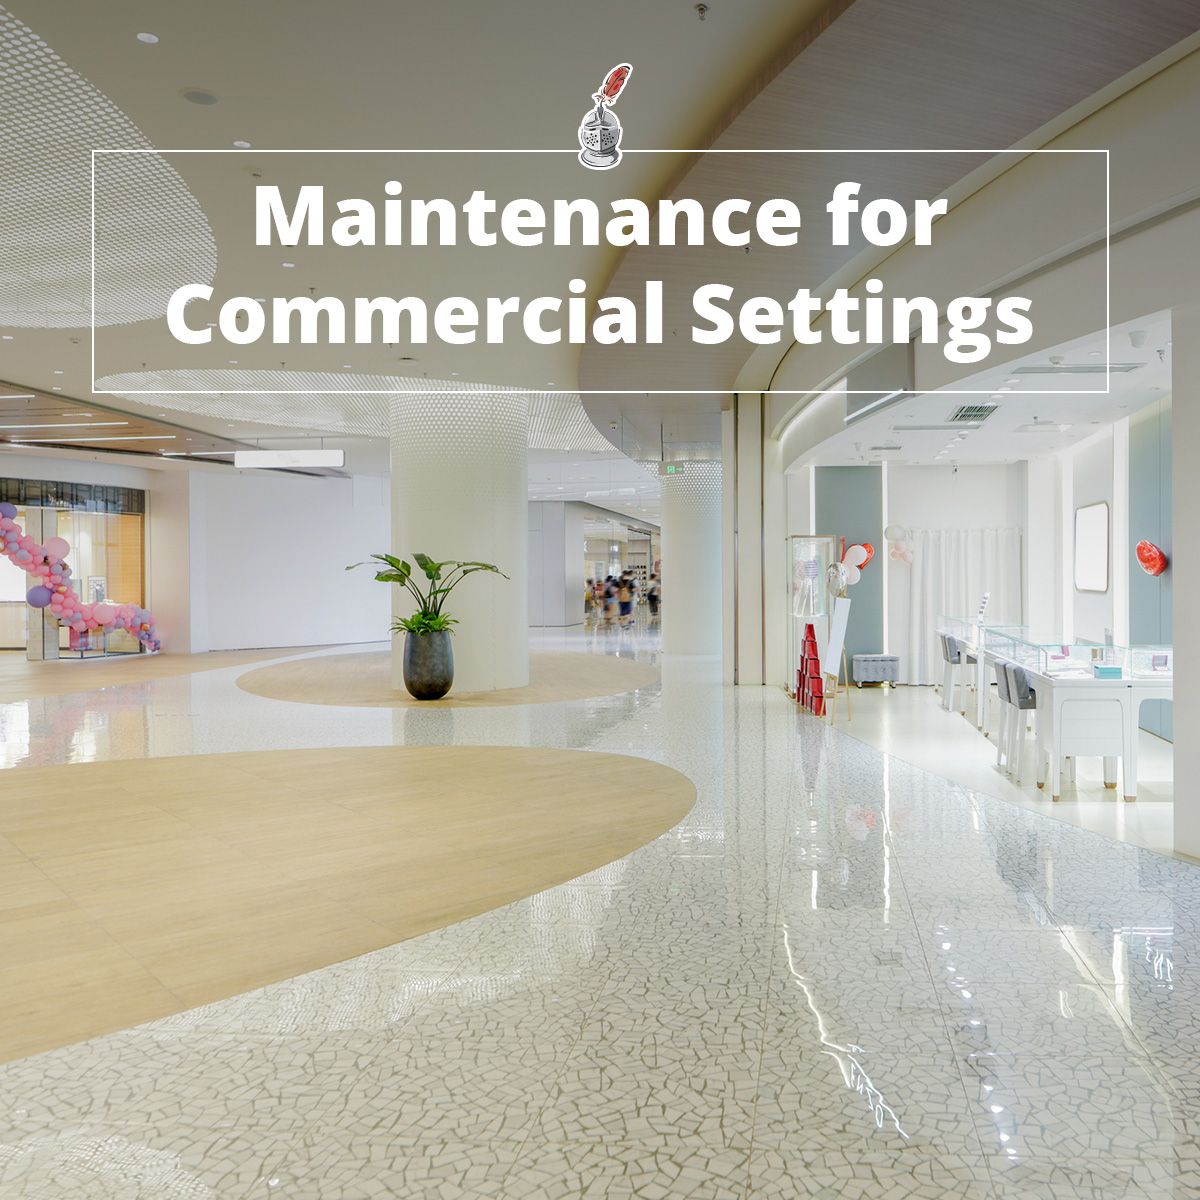 Maintenance for Commercial Settings